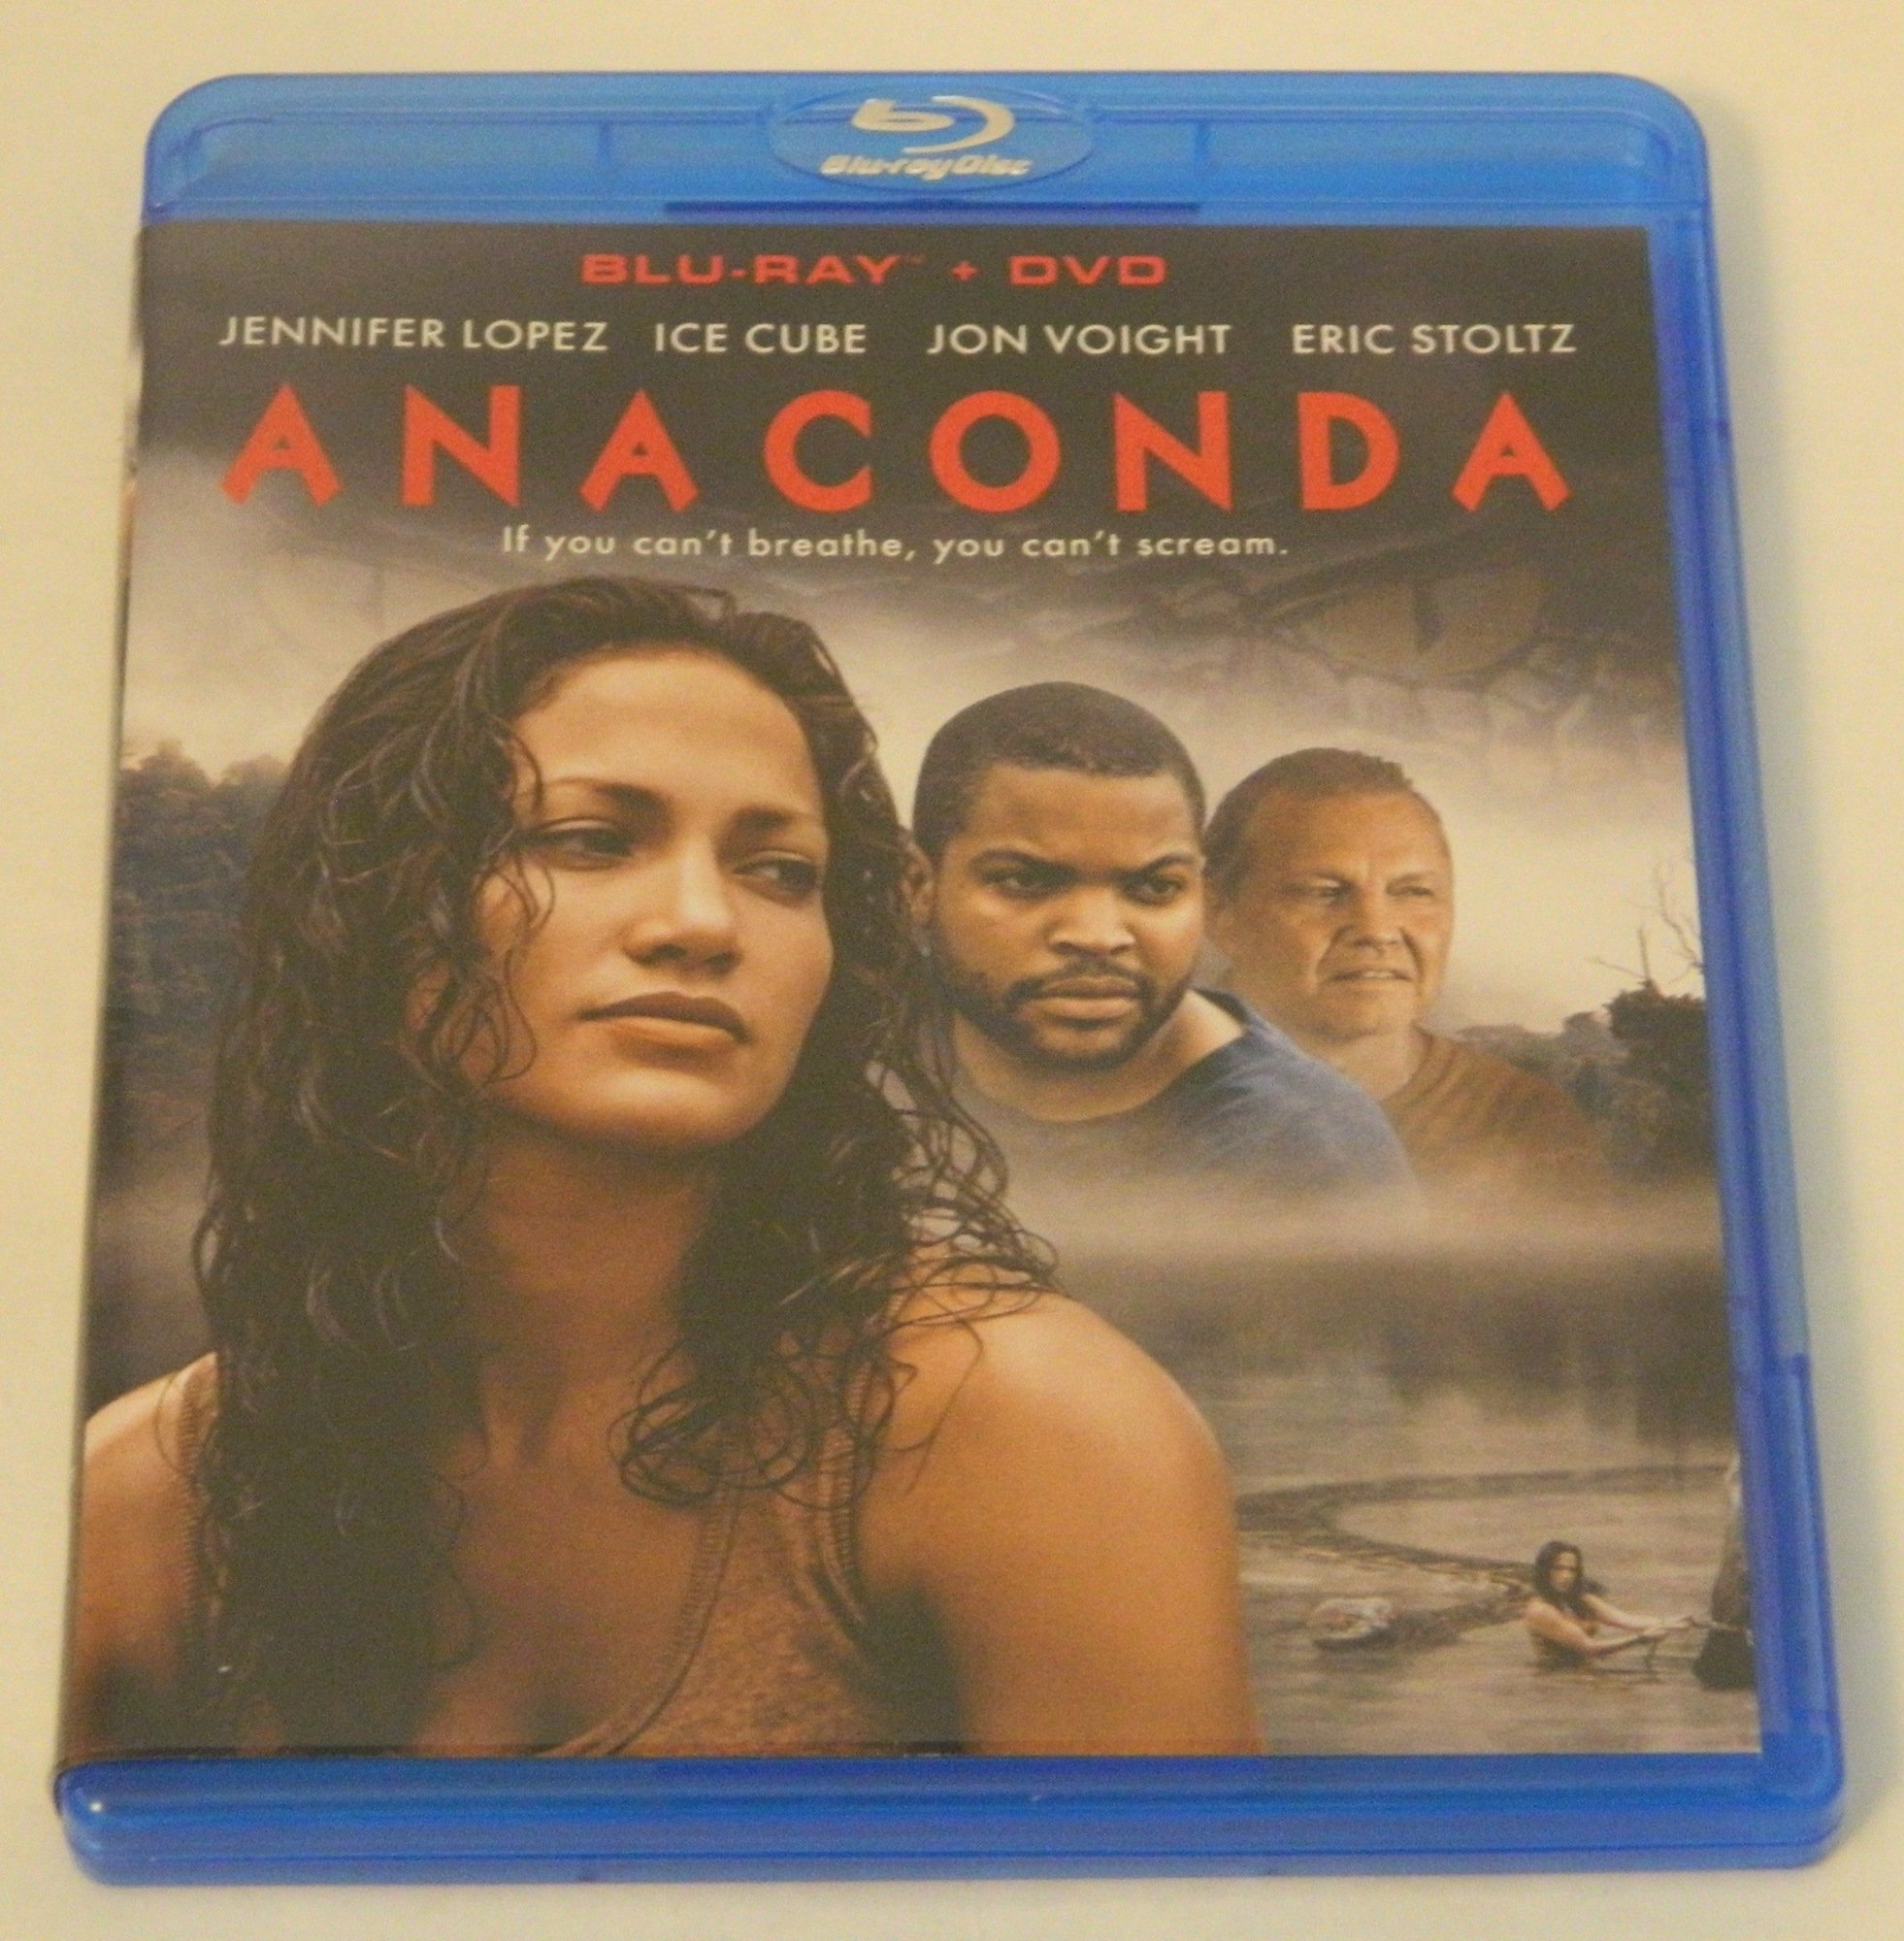 Anaconda (1997) Blu-ray Review - Geeky Hobbies